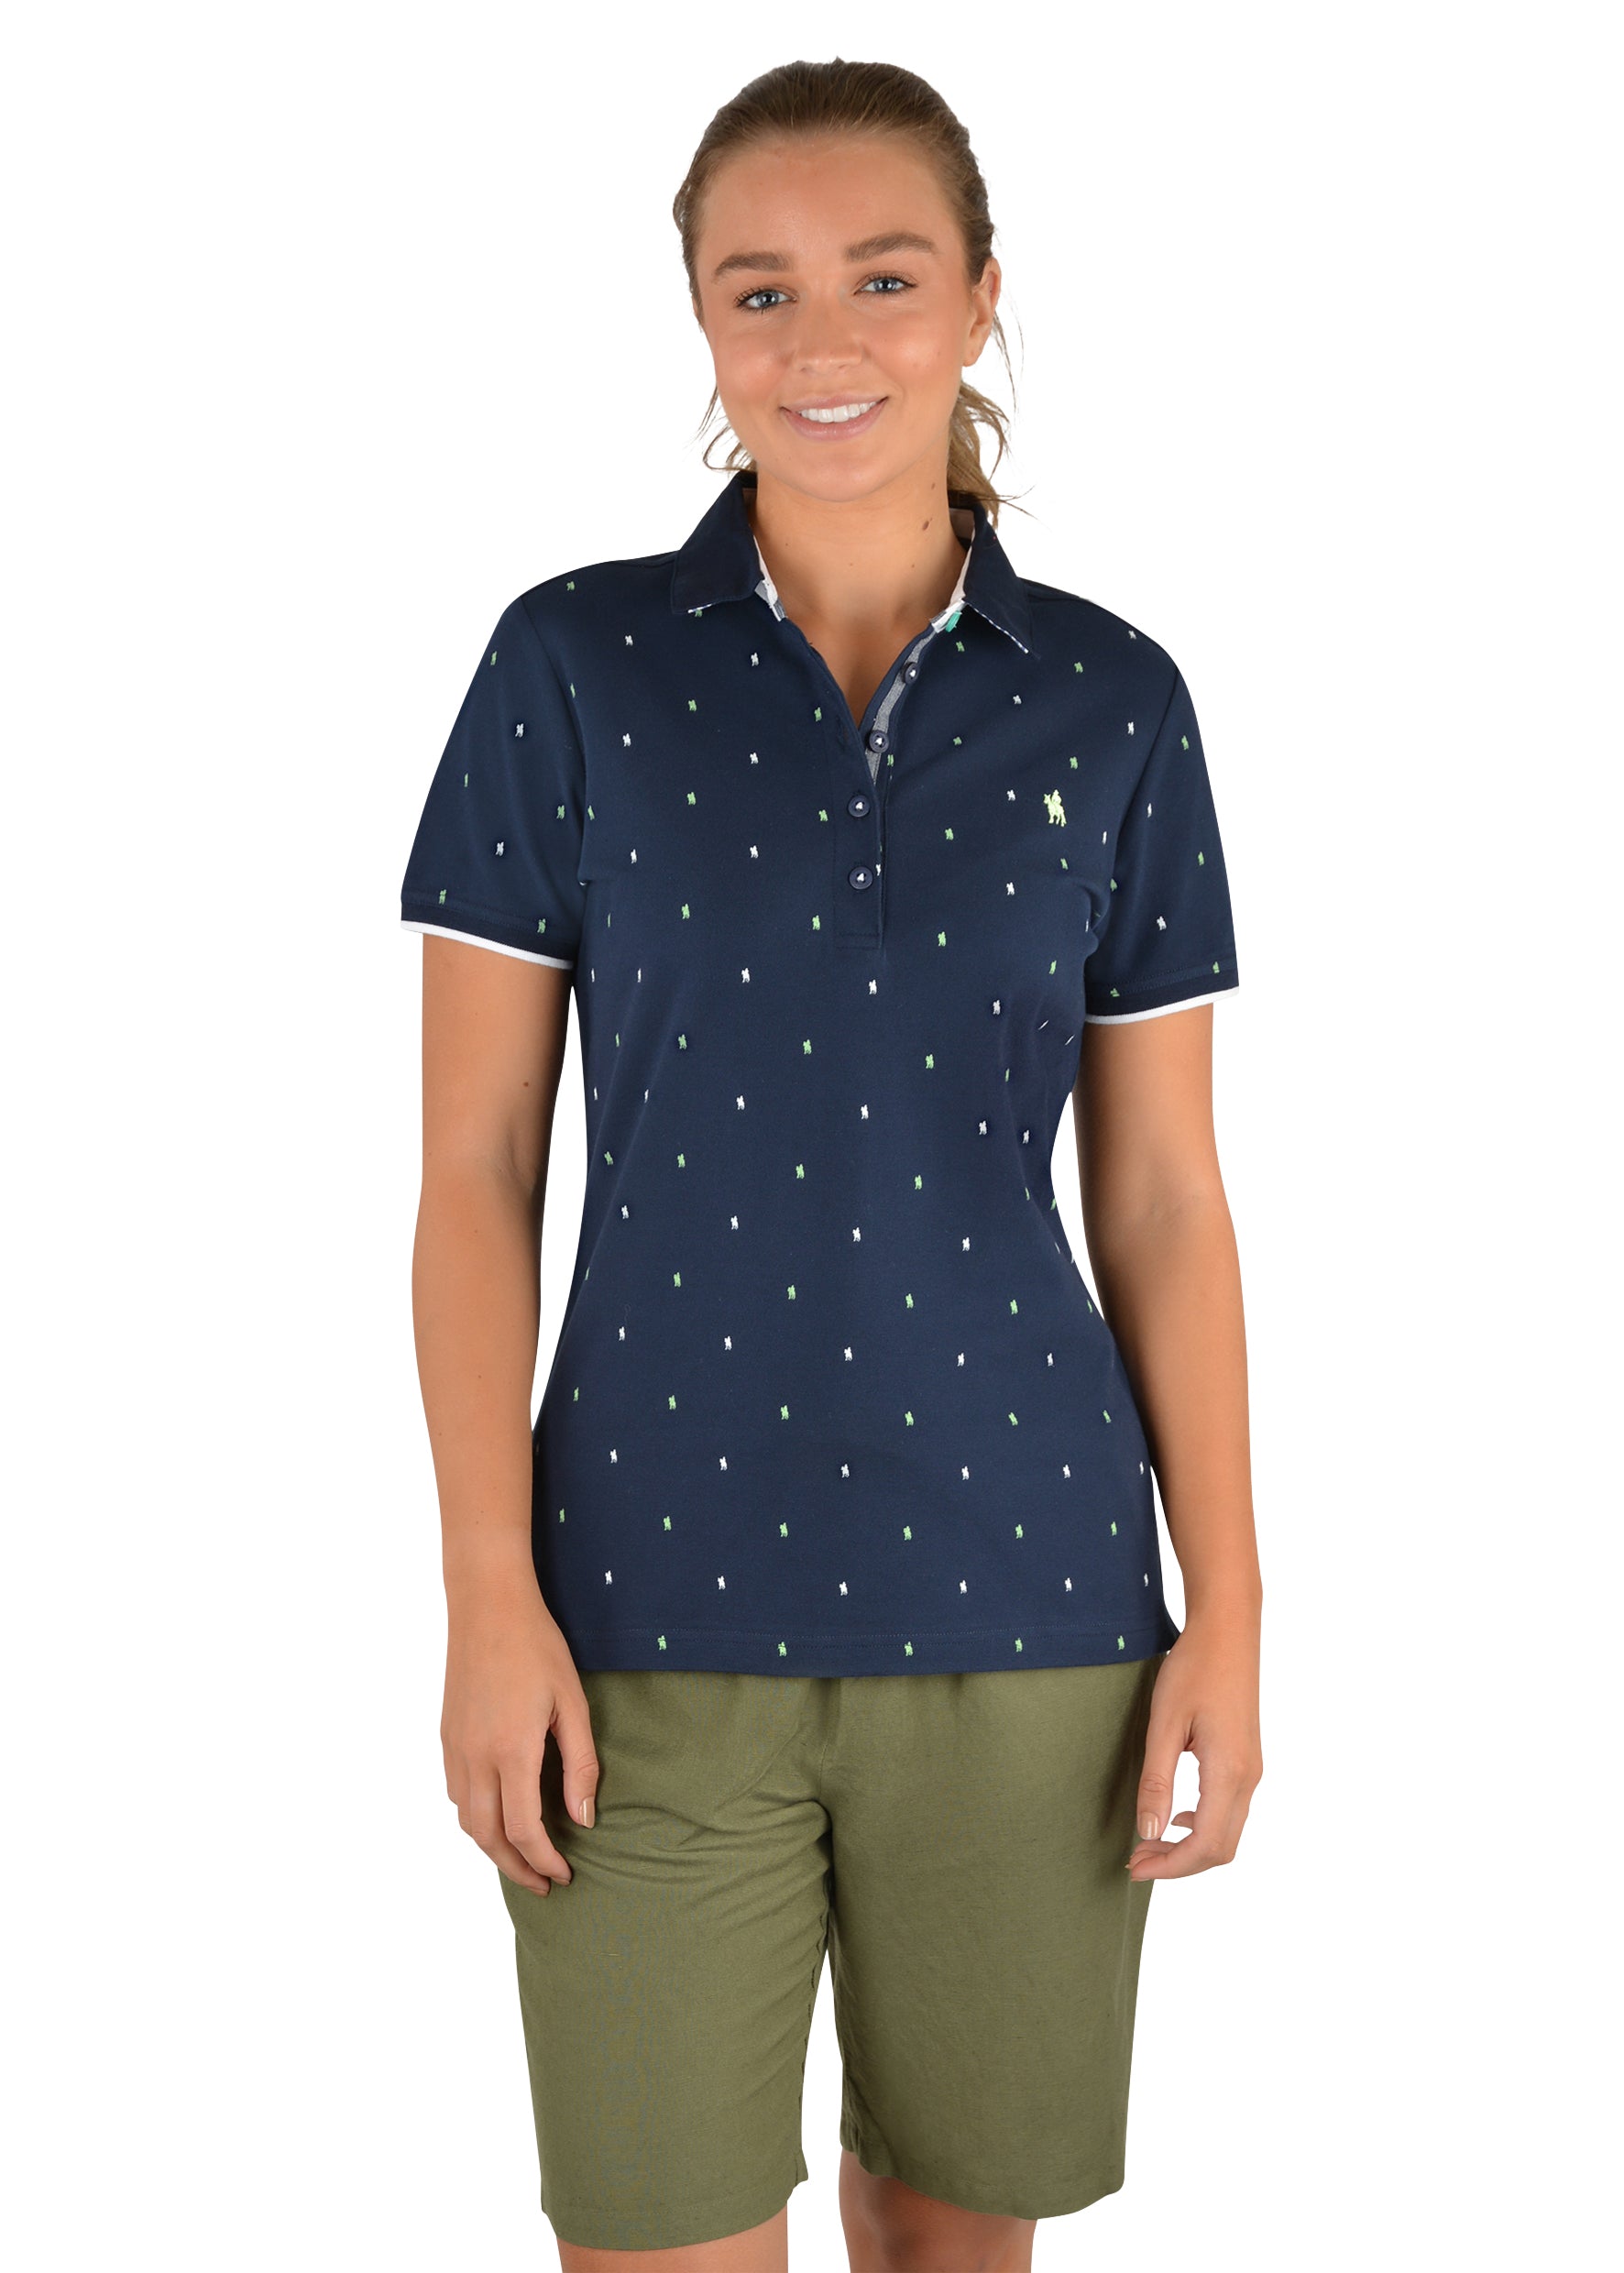 Womens Thomas Cook Cindy Polo Shirt - Mint/Navy (6785481900109)